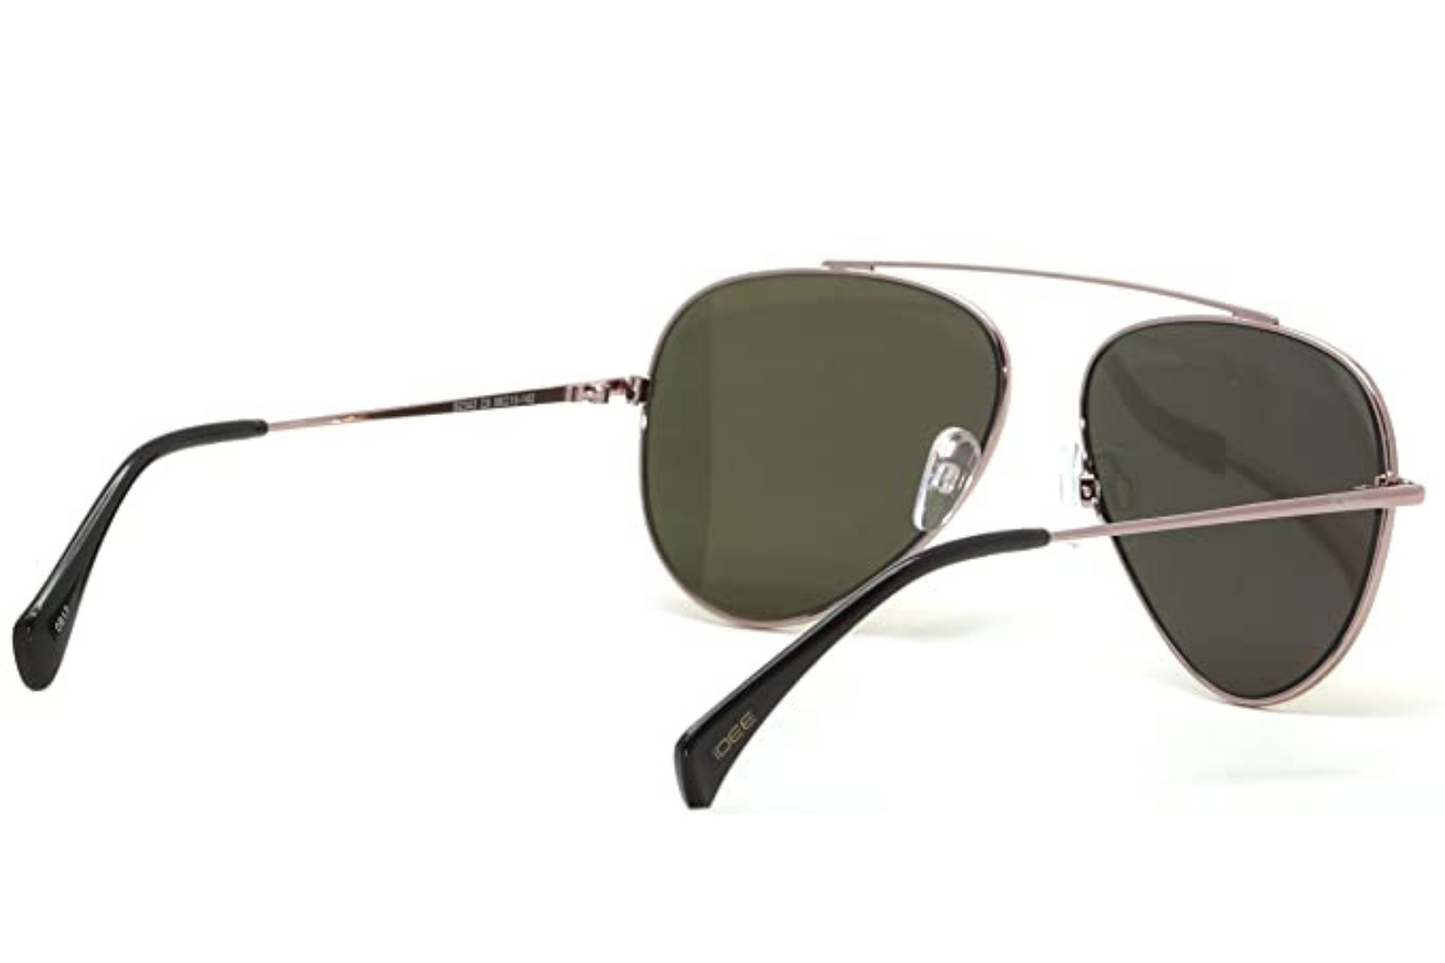 IDEE Sunglasses S2343 C9